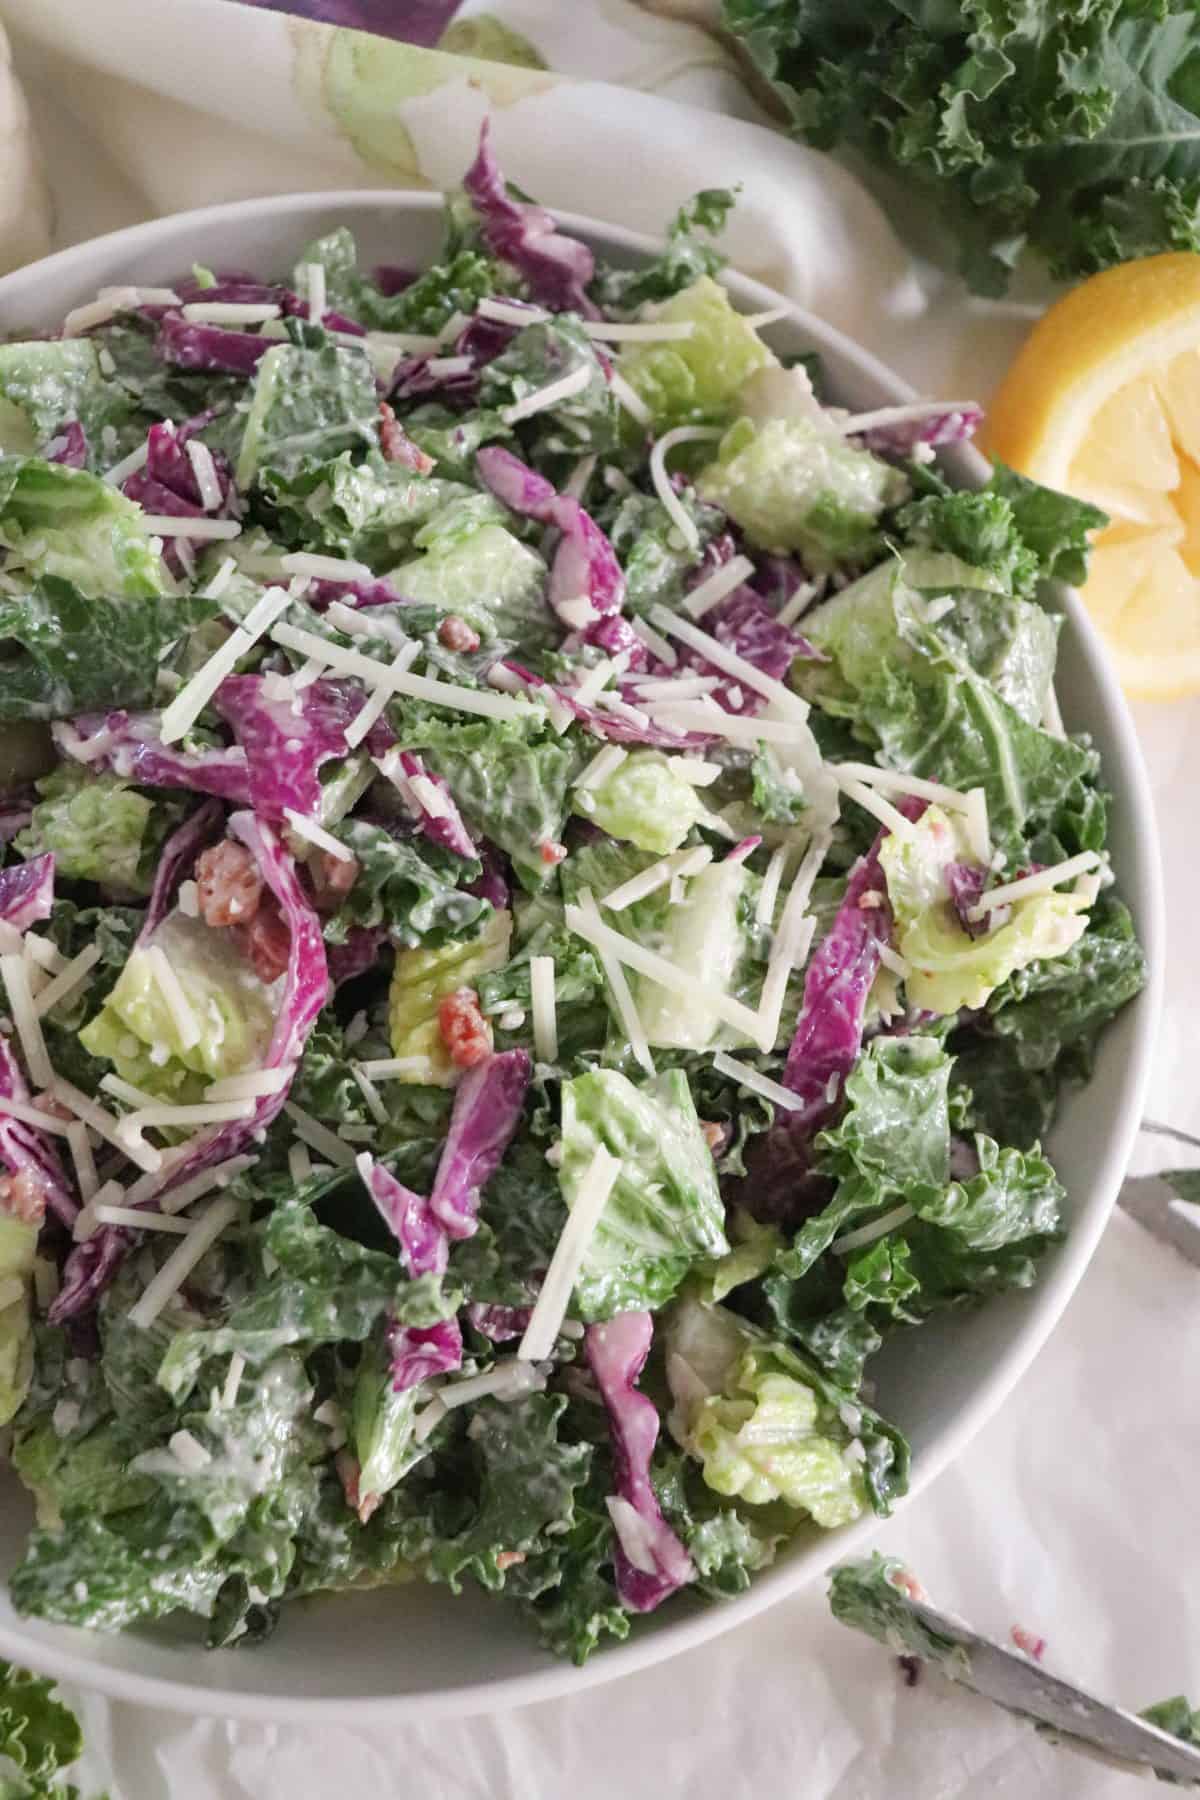 Kale Caesar Salad Recipe